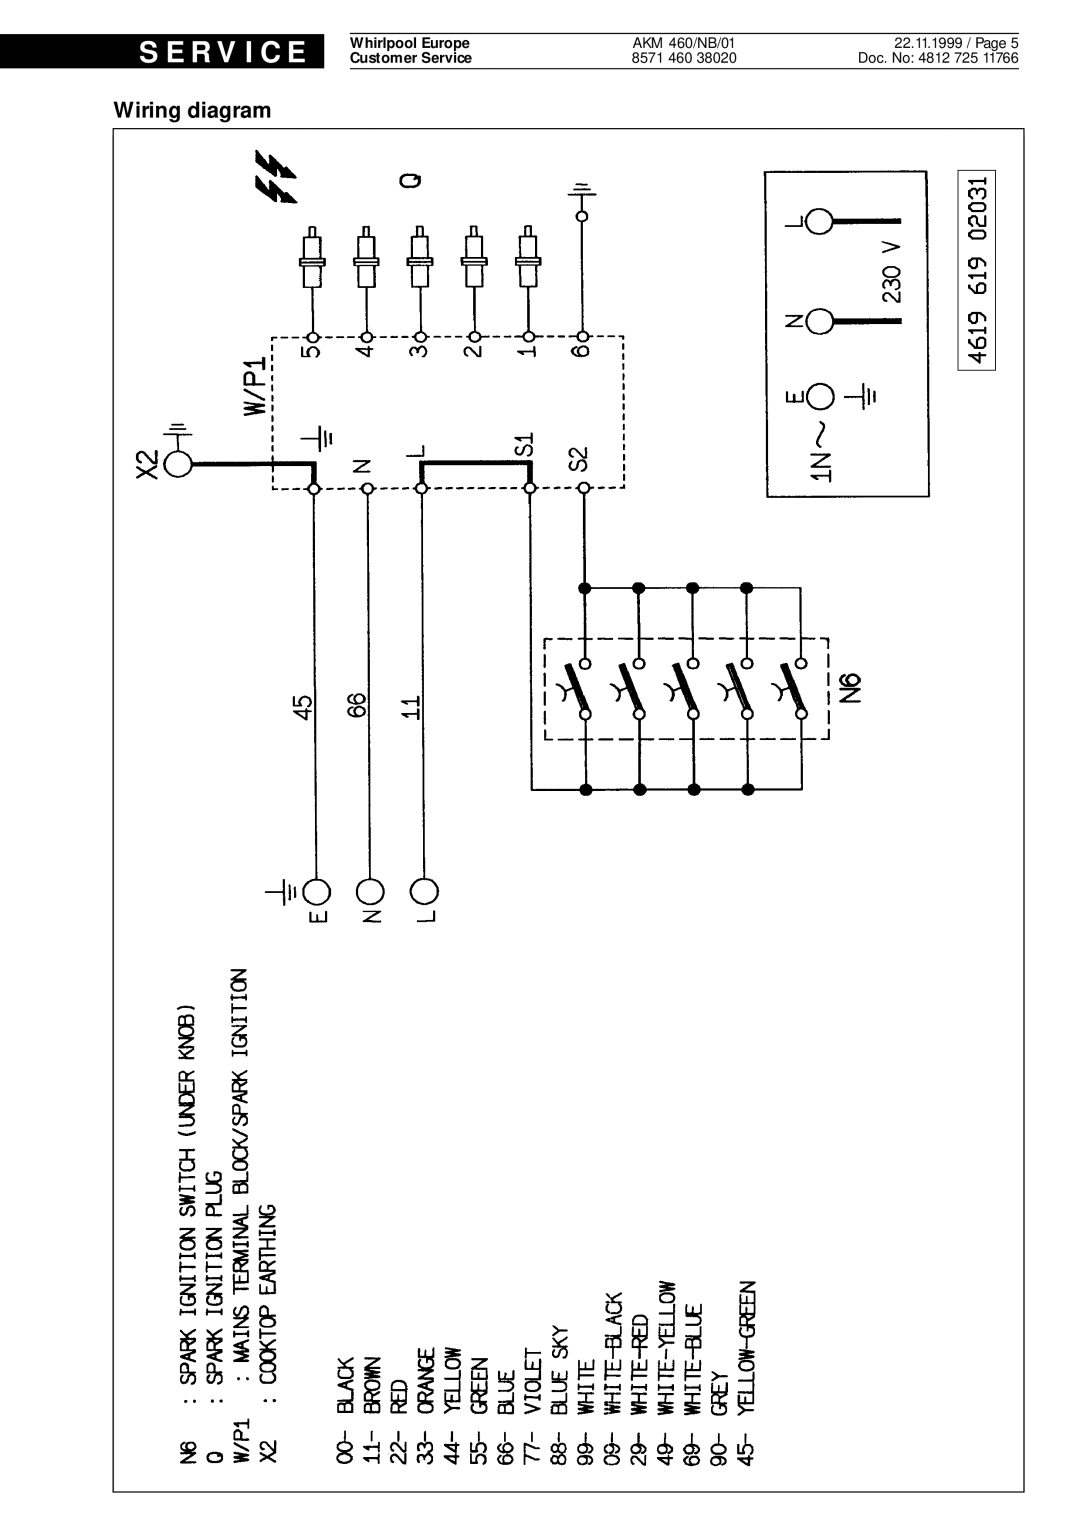 Whirlpool AKM 460 NB 1 service manual Wiring diagram, S E R V I C E, Whirlpool Europe, Customer Service, Doc. No 